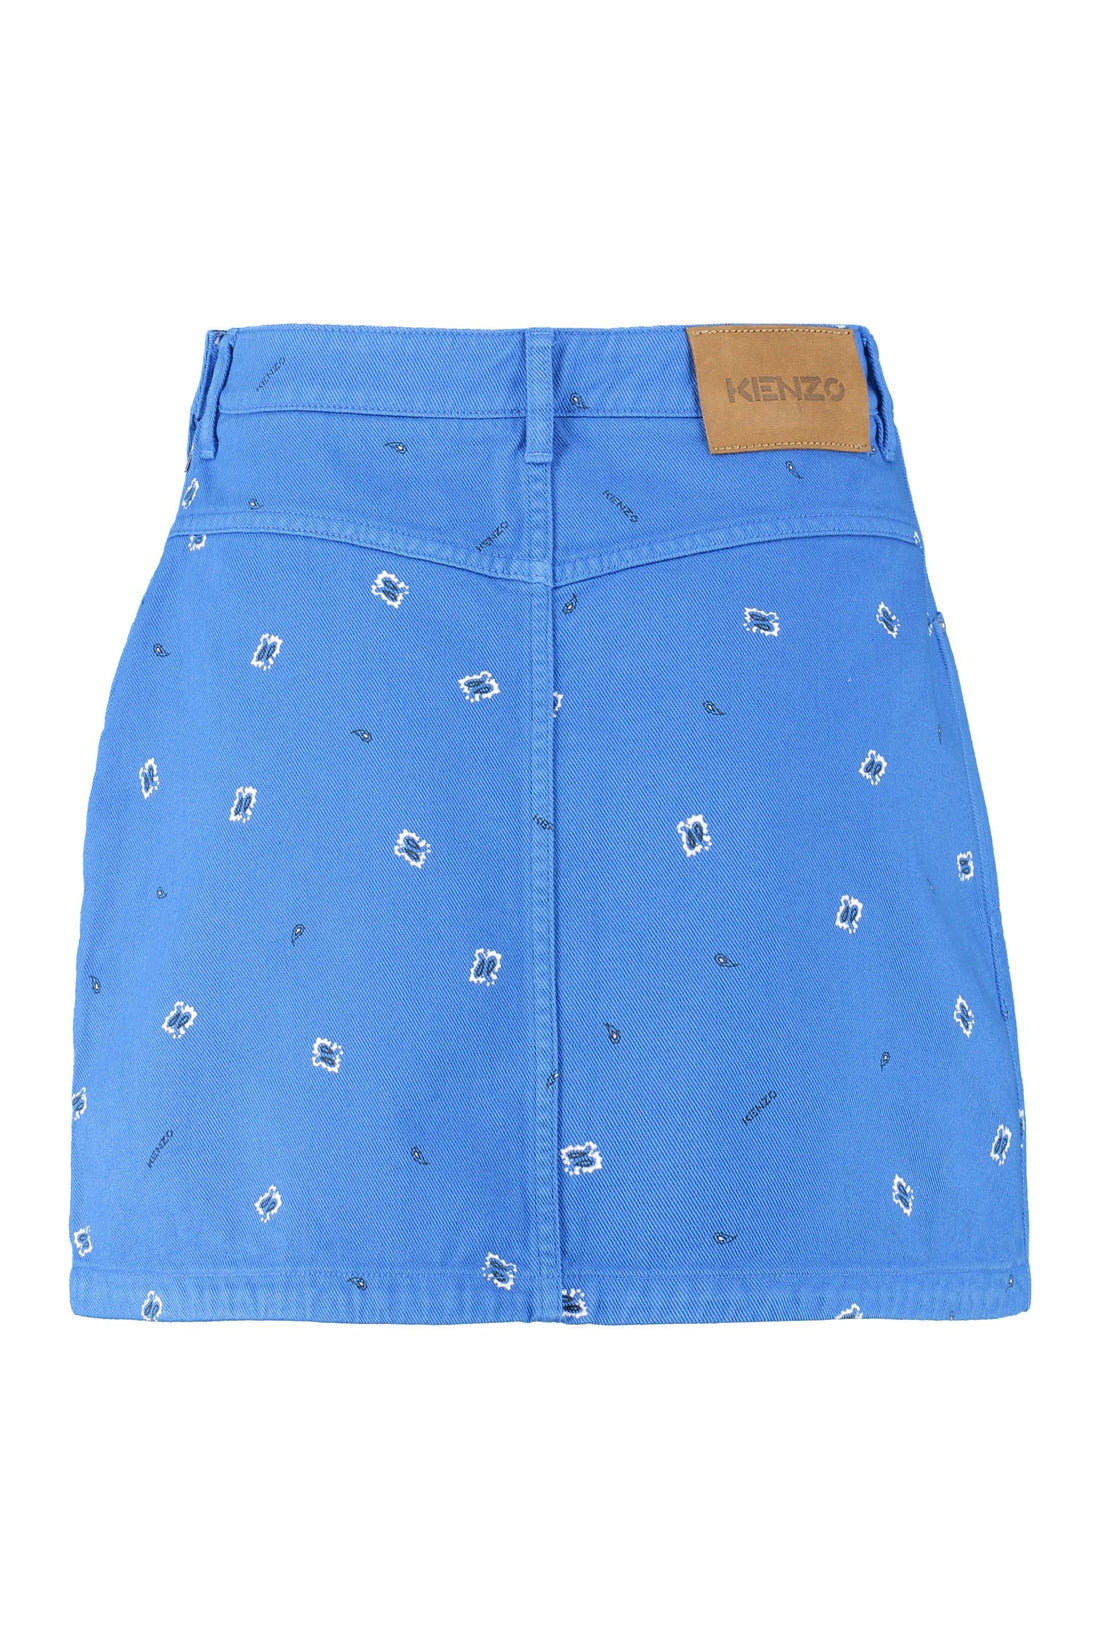 Kenzo-OUTLET-SALE-Denim mini skirt-ARCHIVIST